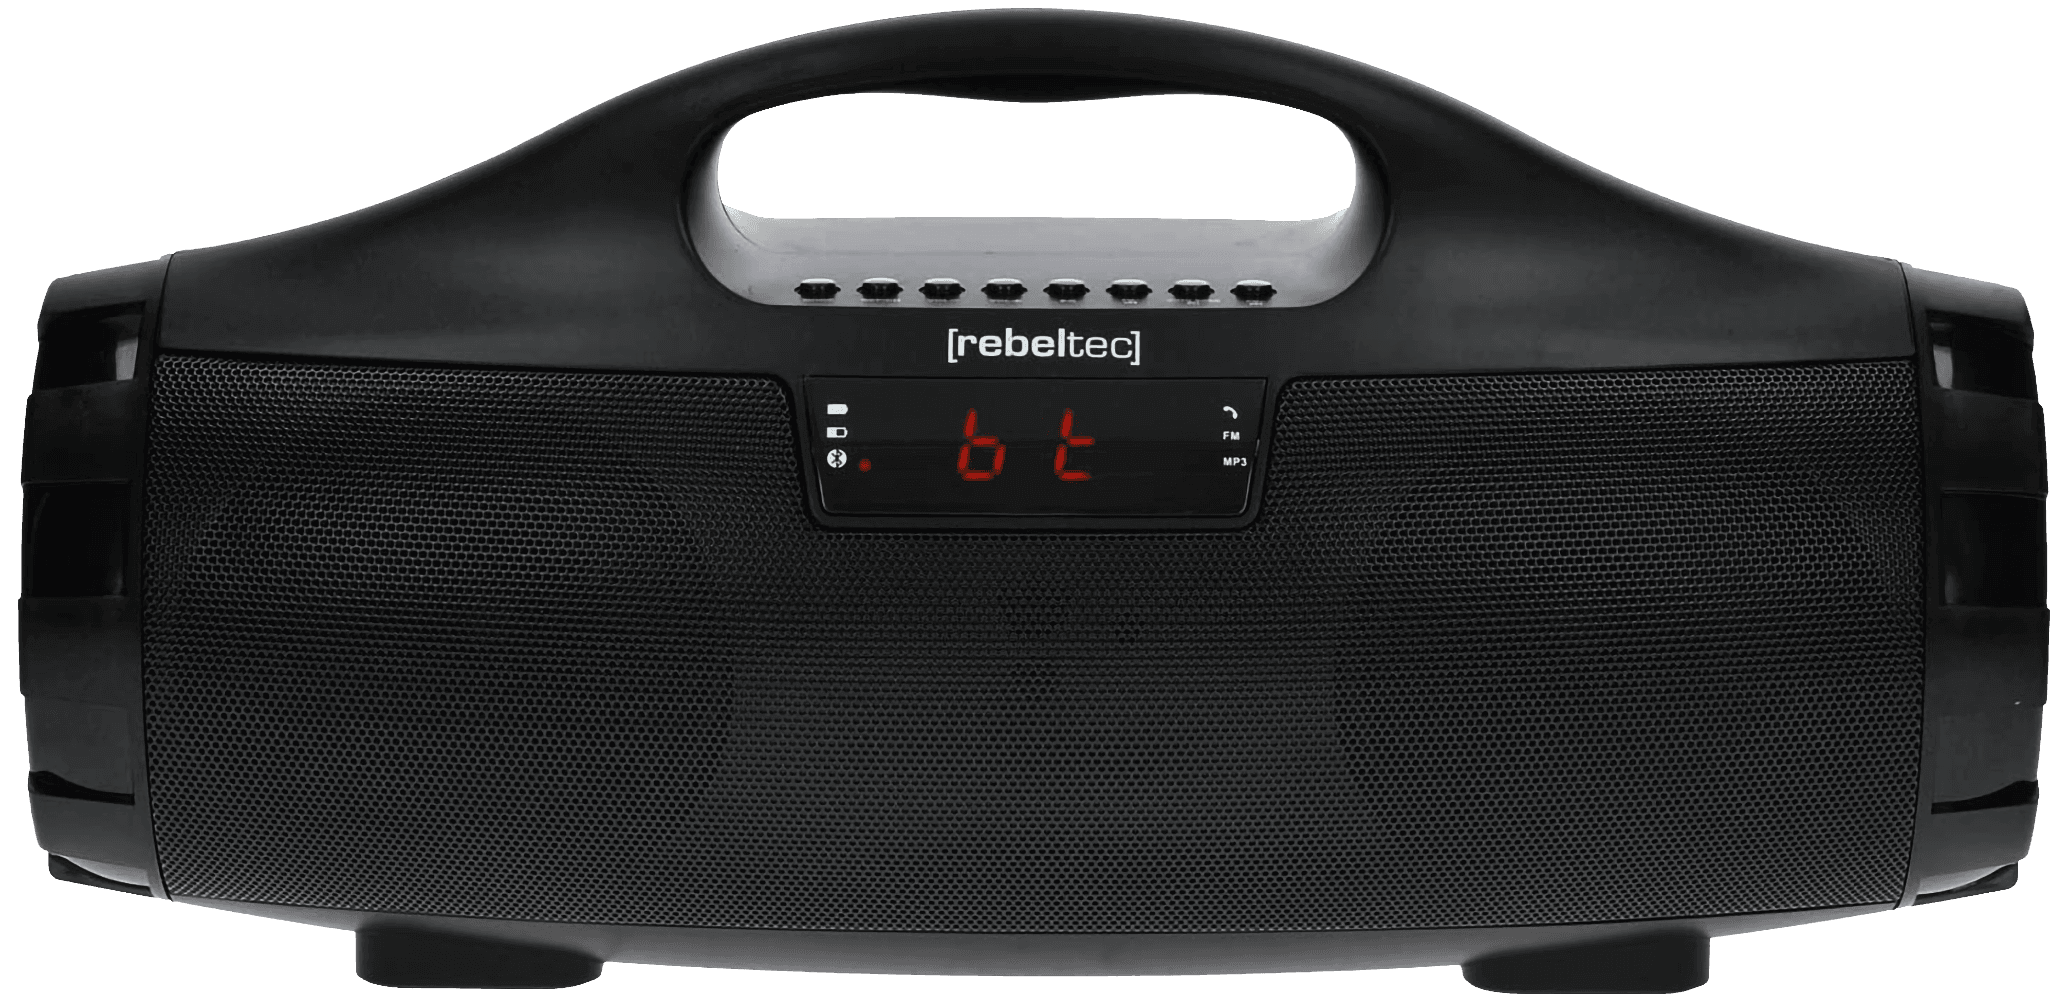 Motorola Moto G 5G Plus kompatibilis bluetooth hangszóró Rebeltec Soundbox 390 fekete